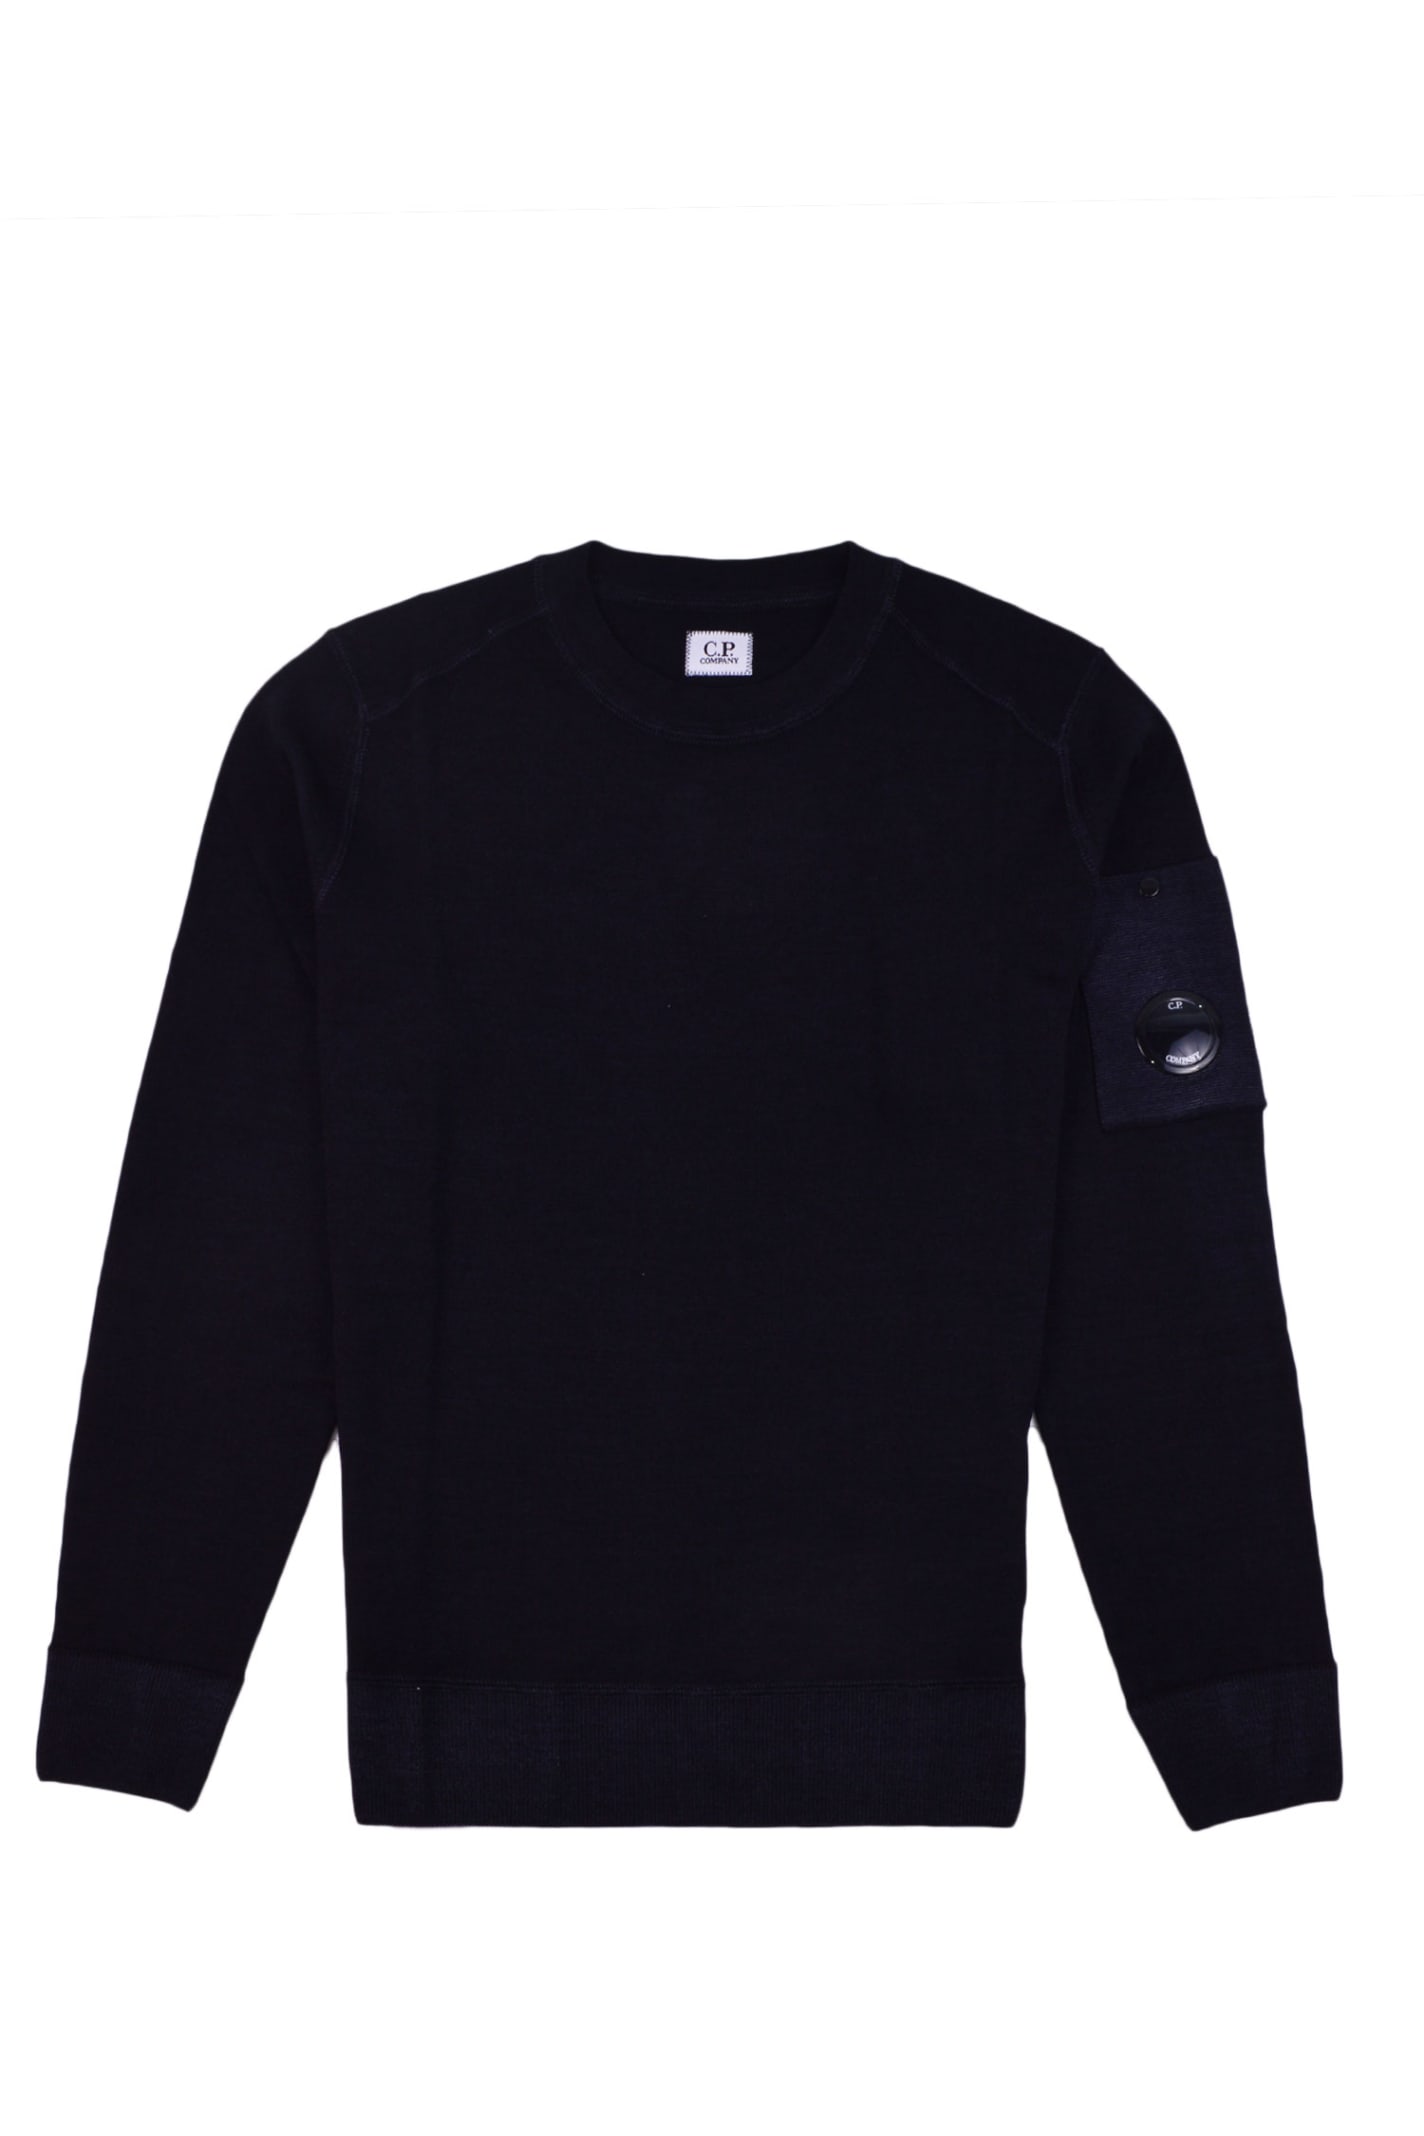 C.P. Company Sweater